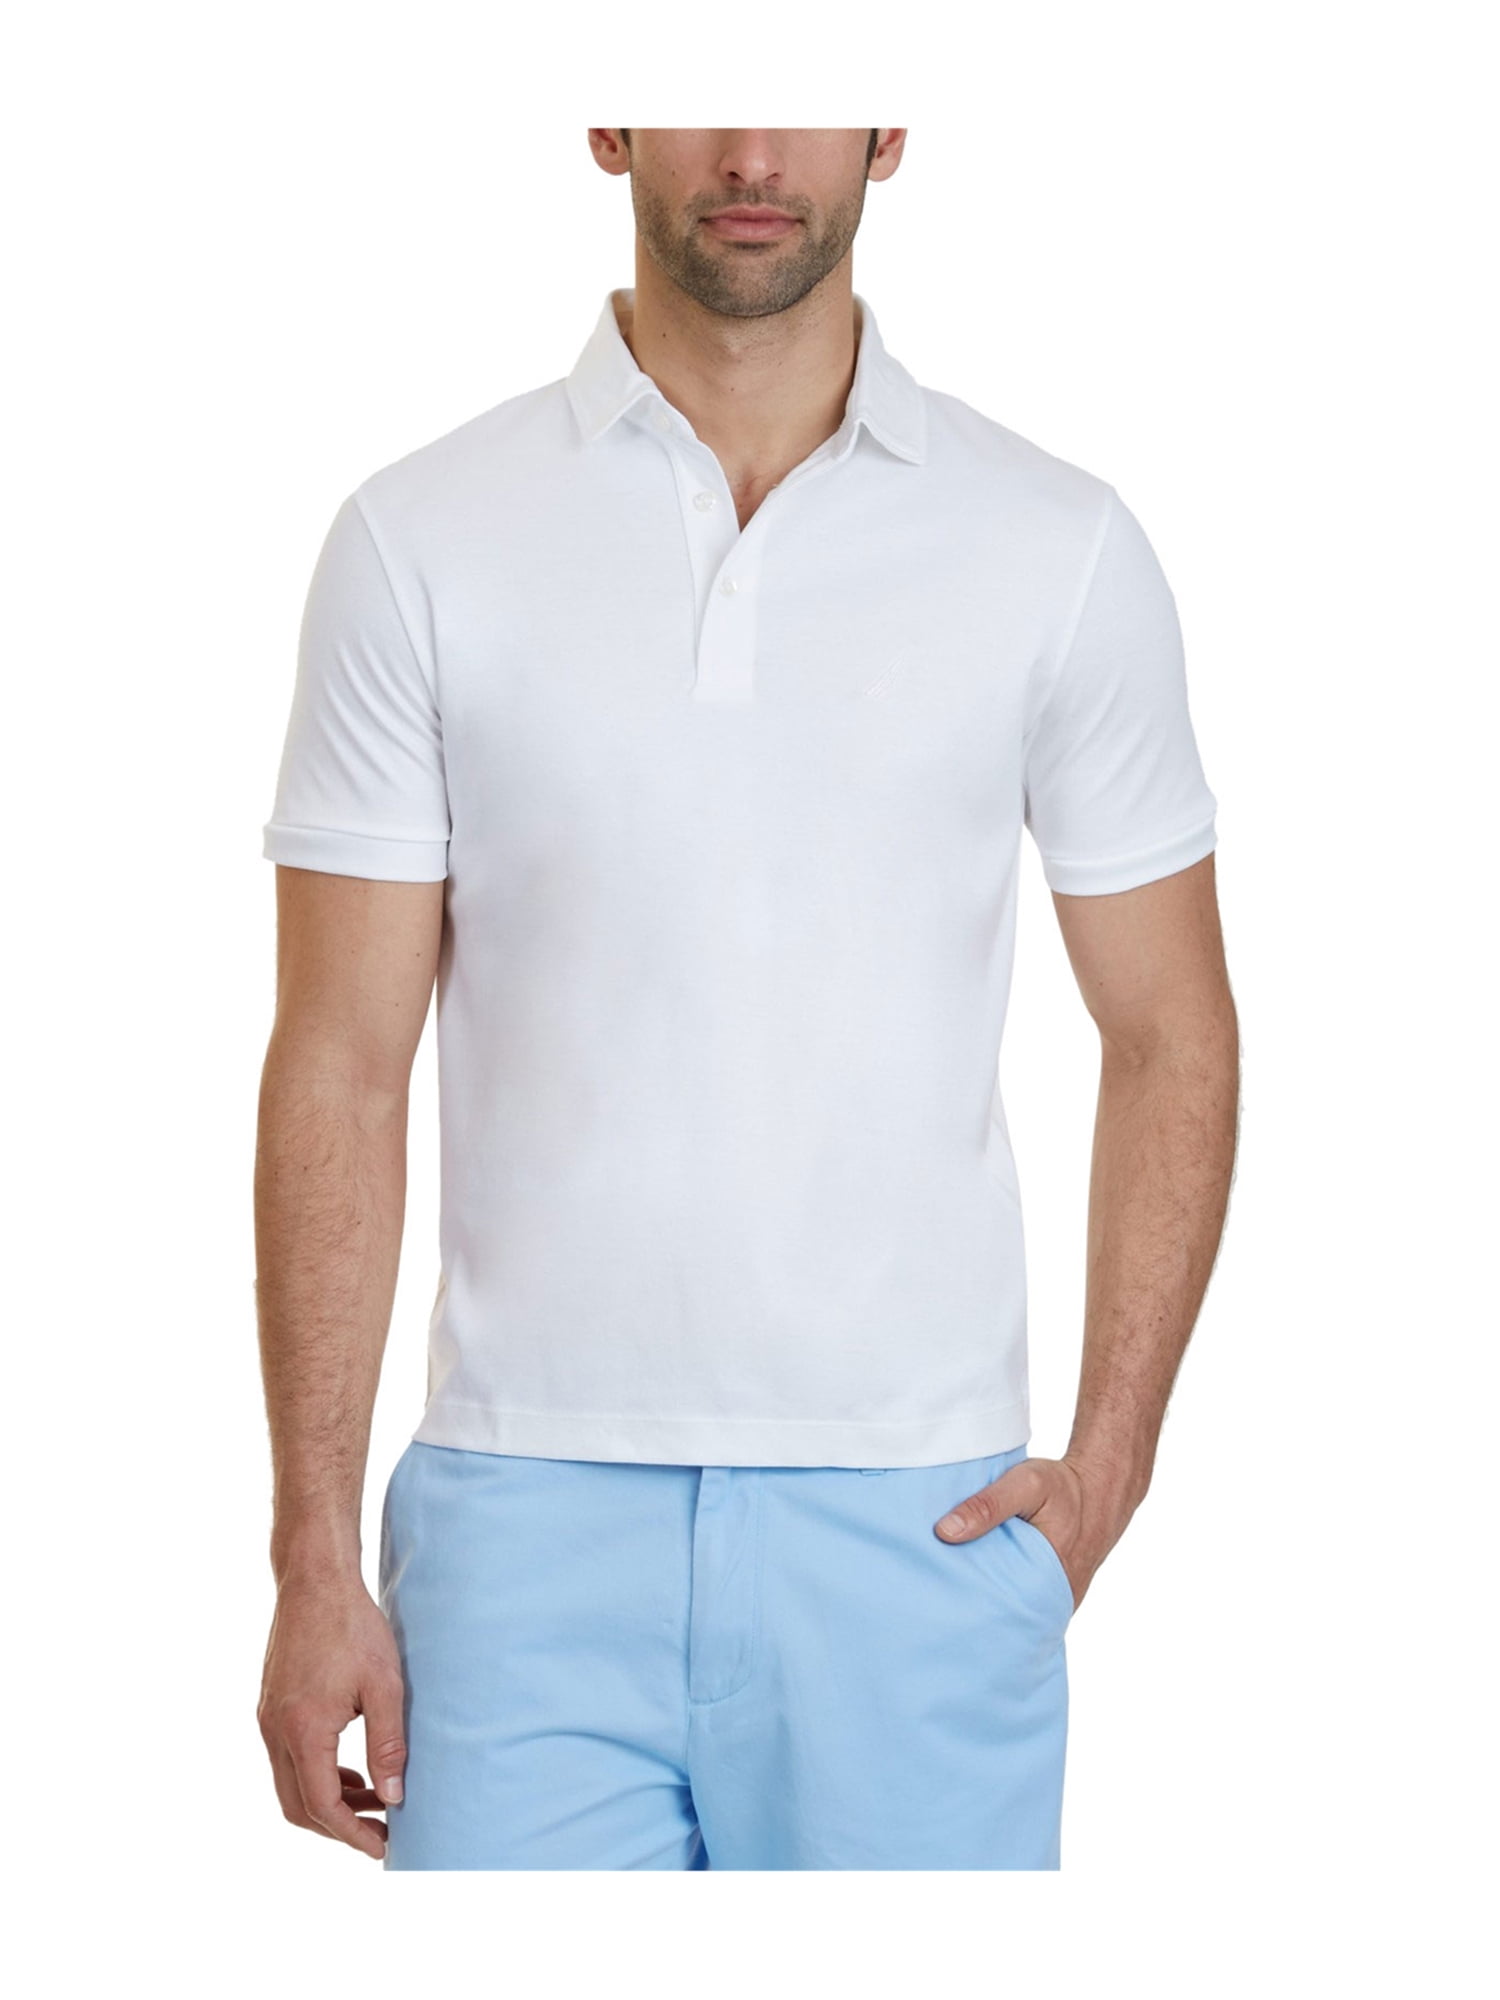 Nautica Mens Softex Rugby Polo Shirt brightwht S | Walmart Canada